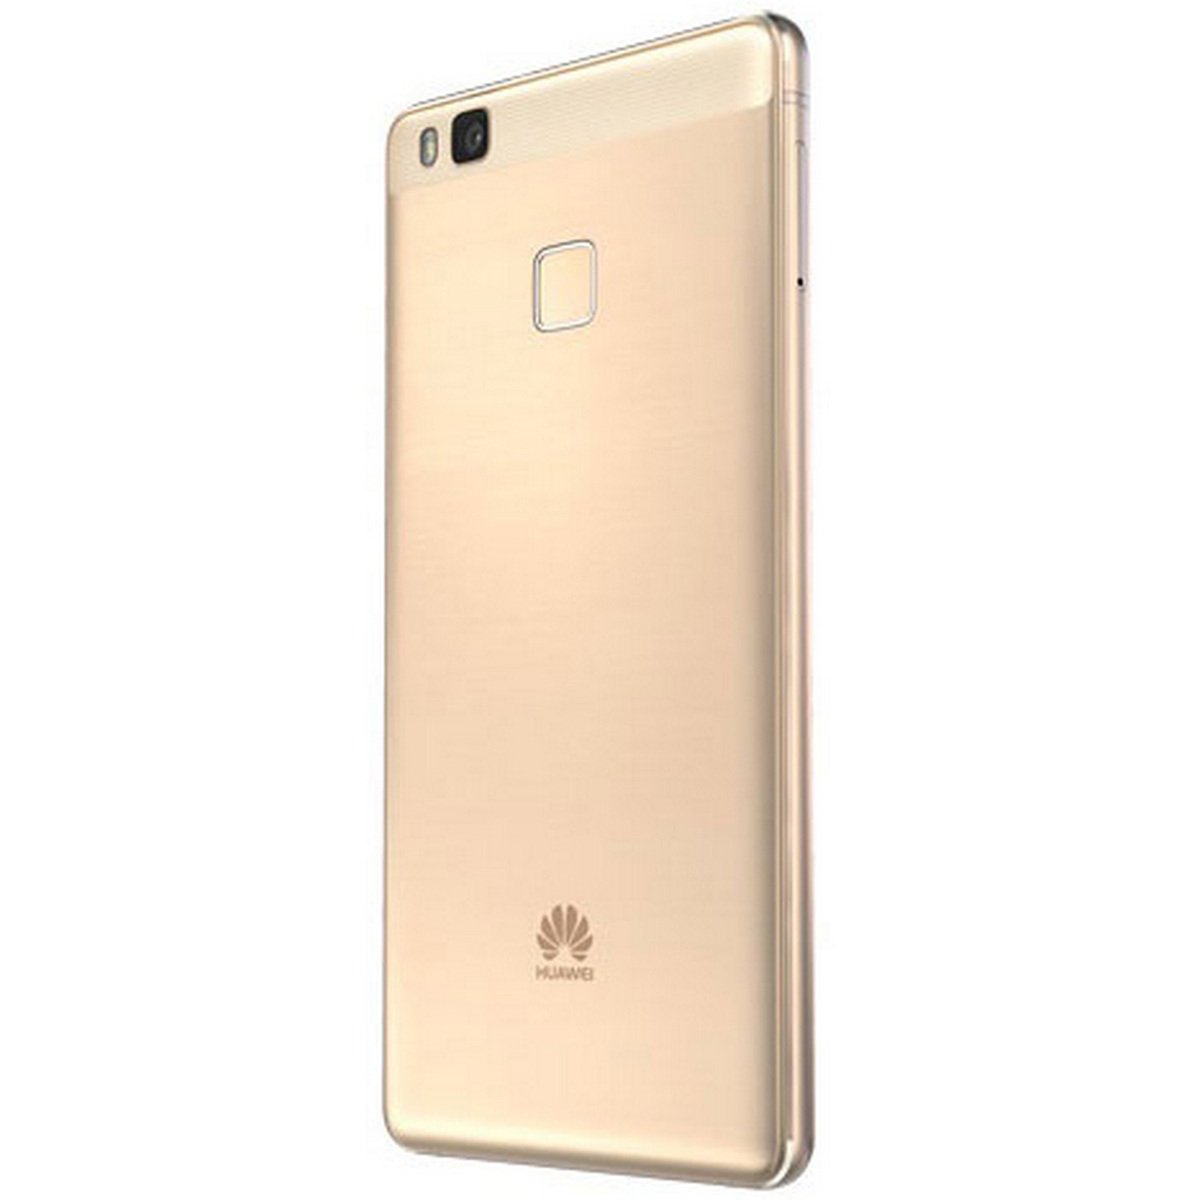 Huawei P9 Lite 16GB Gold